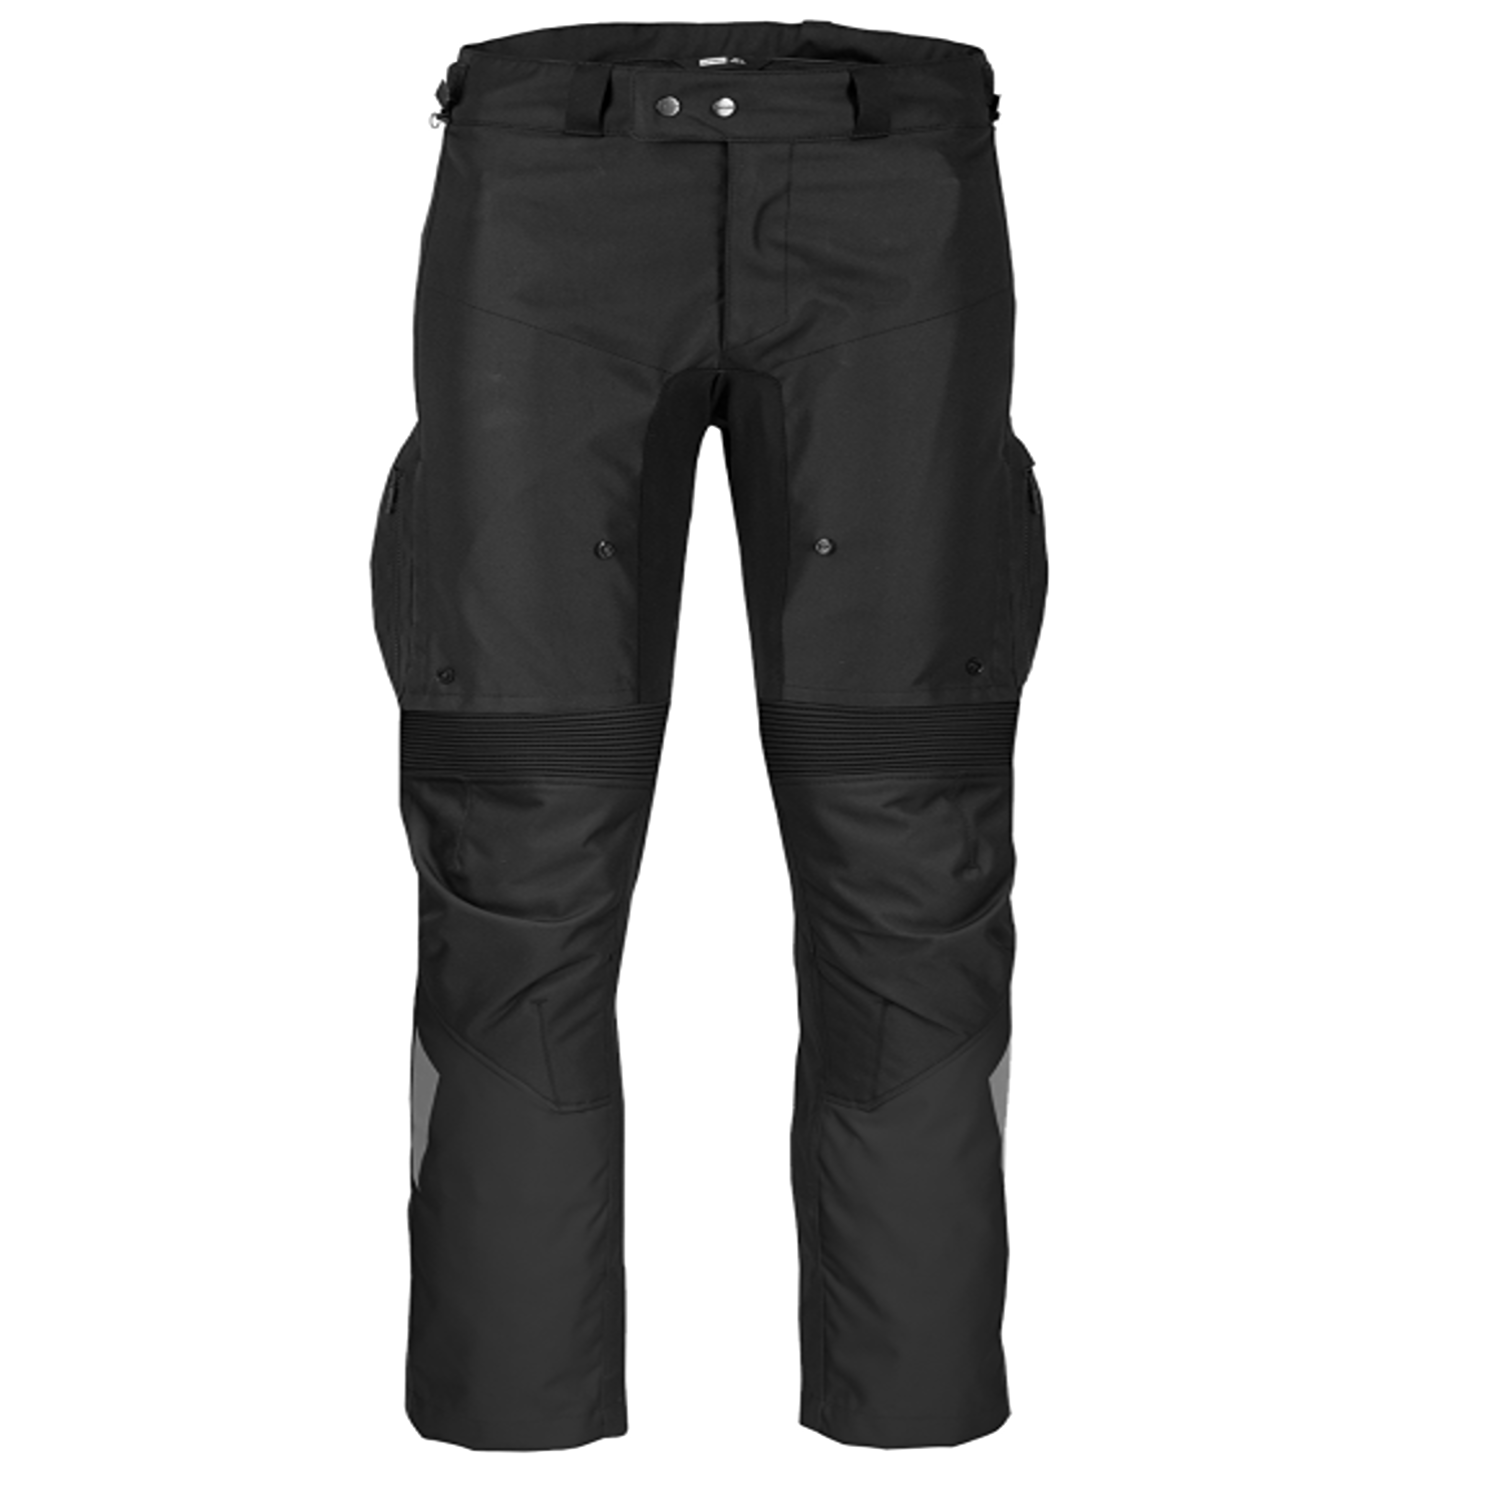 Image of Spidi Crossmaster Short Pants Black Size 2XL ID 8030161463842